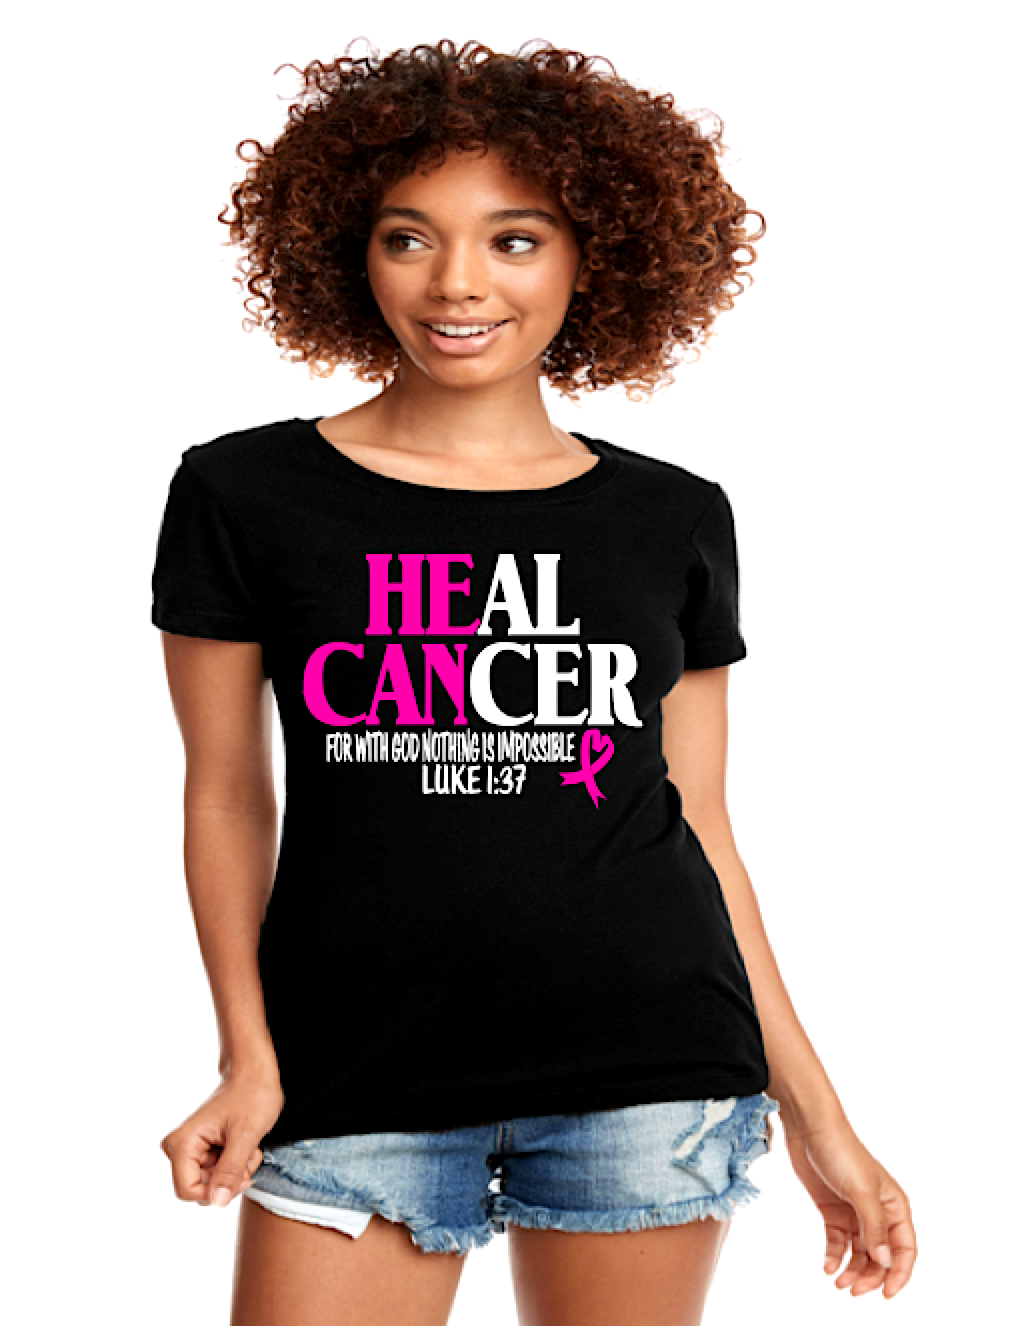 HEal CANcer - WARV Creations